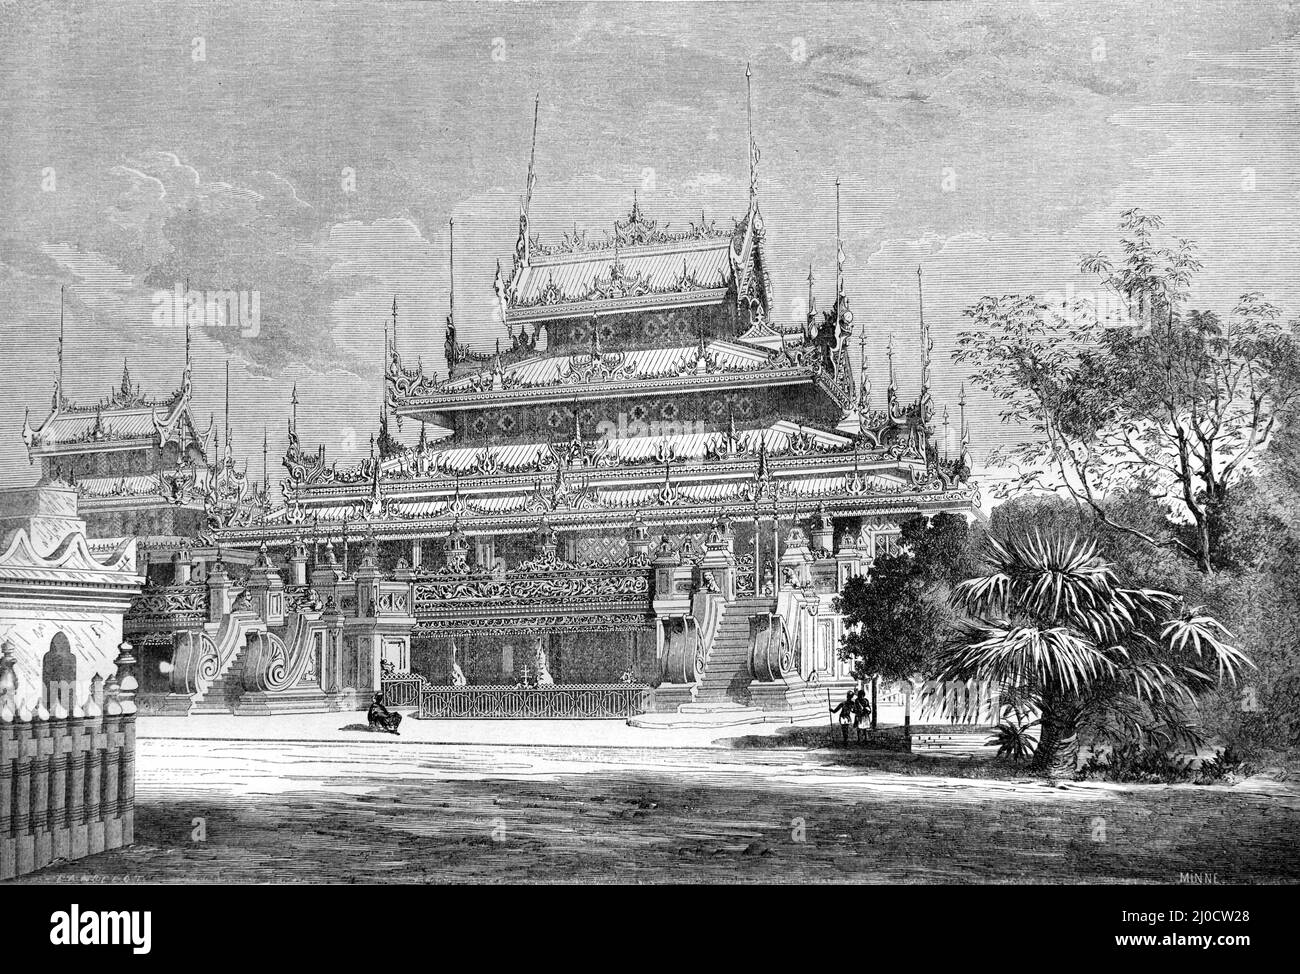 Königspalast von König Bodawpaya, Amarapura, aka Ummerapoora, Mandalay, Burma oder Myanmar. Vintage Illustration oder Gravur 1860. Stockfoto